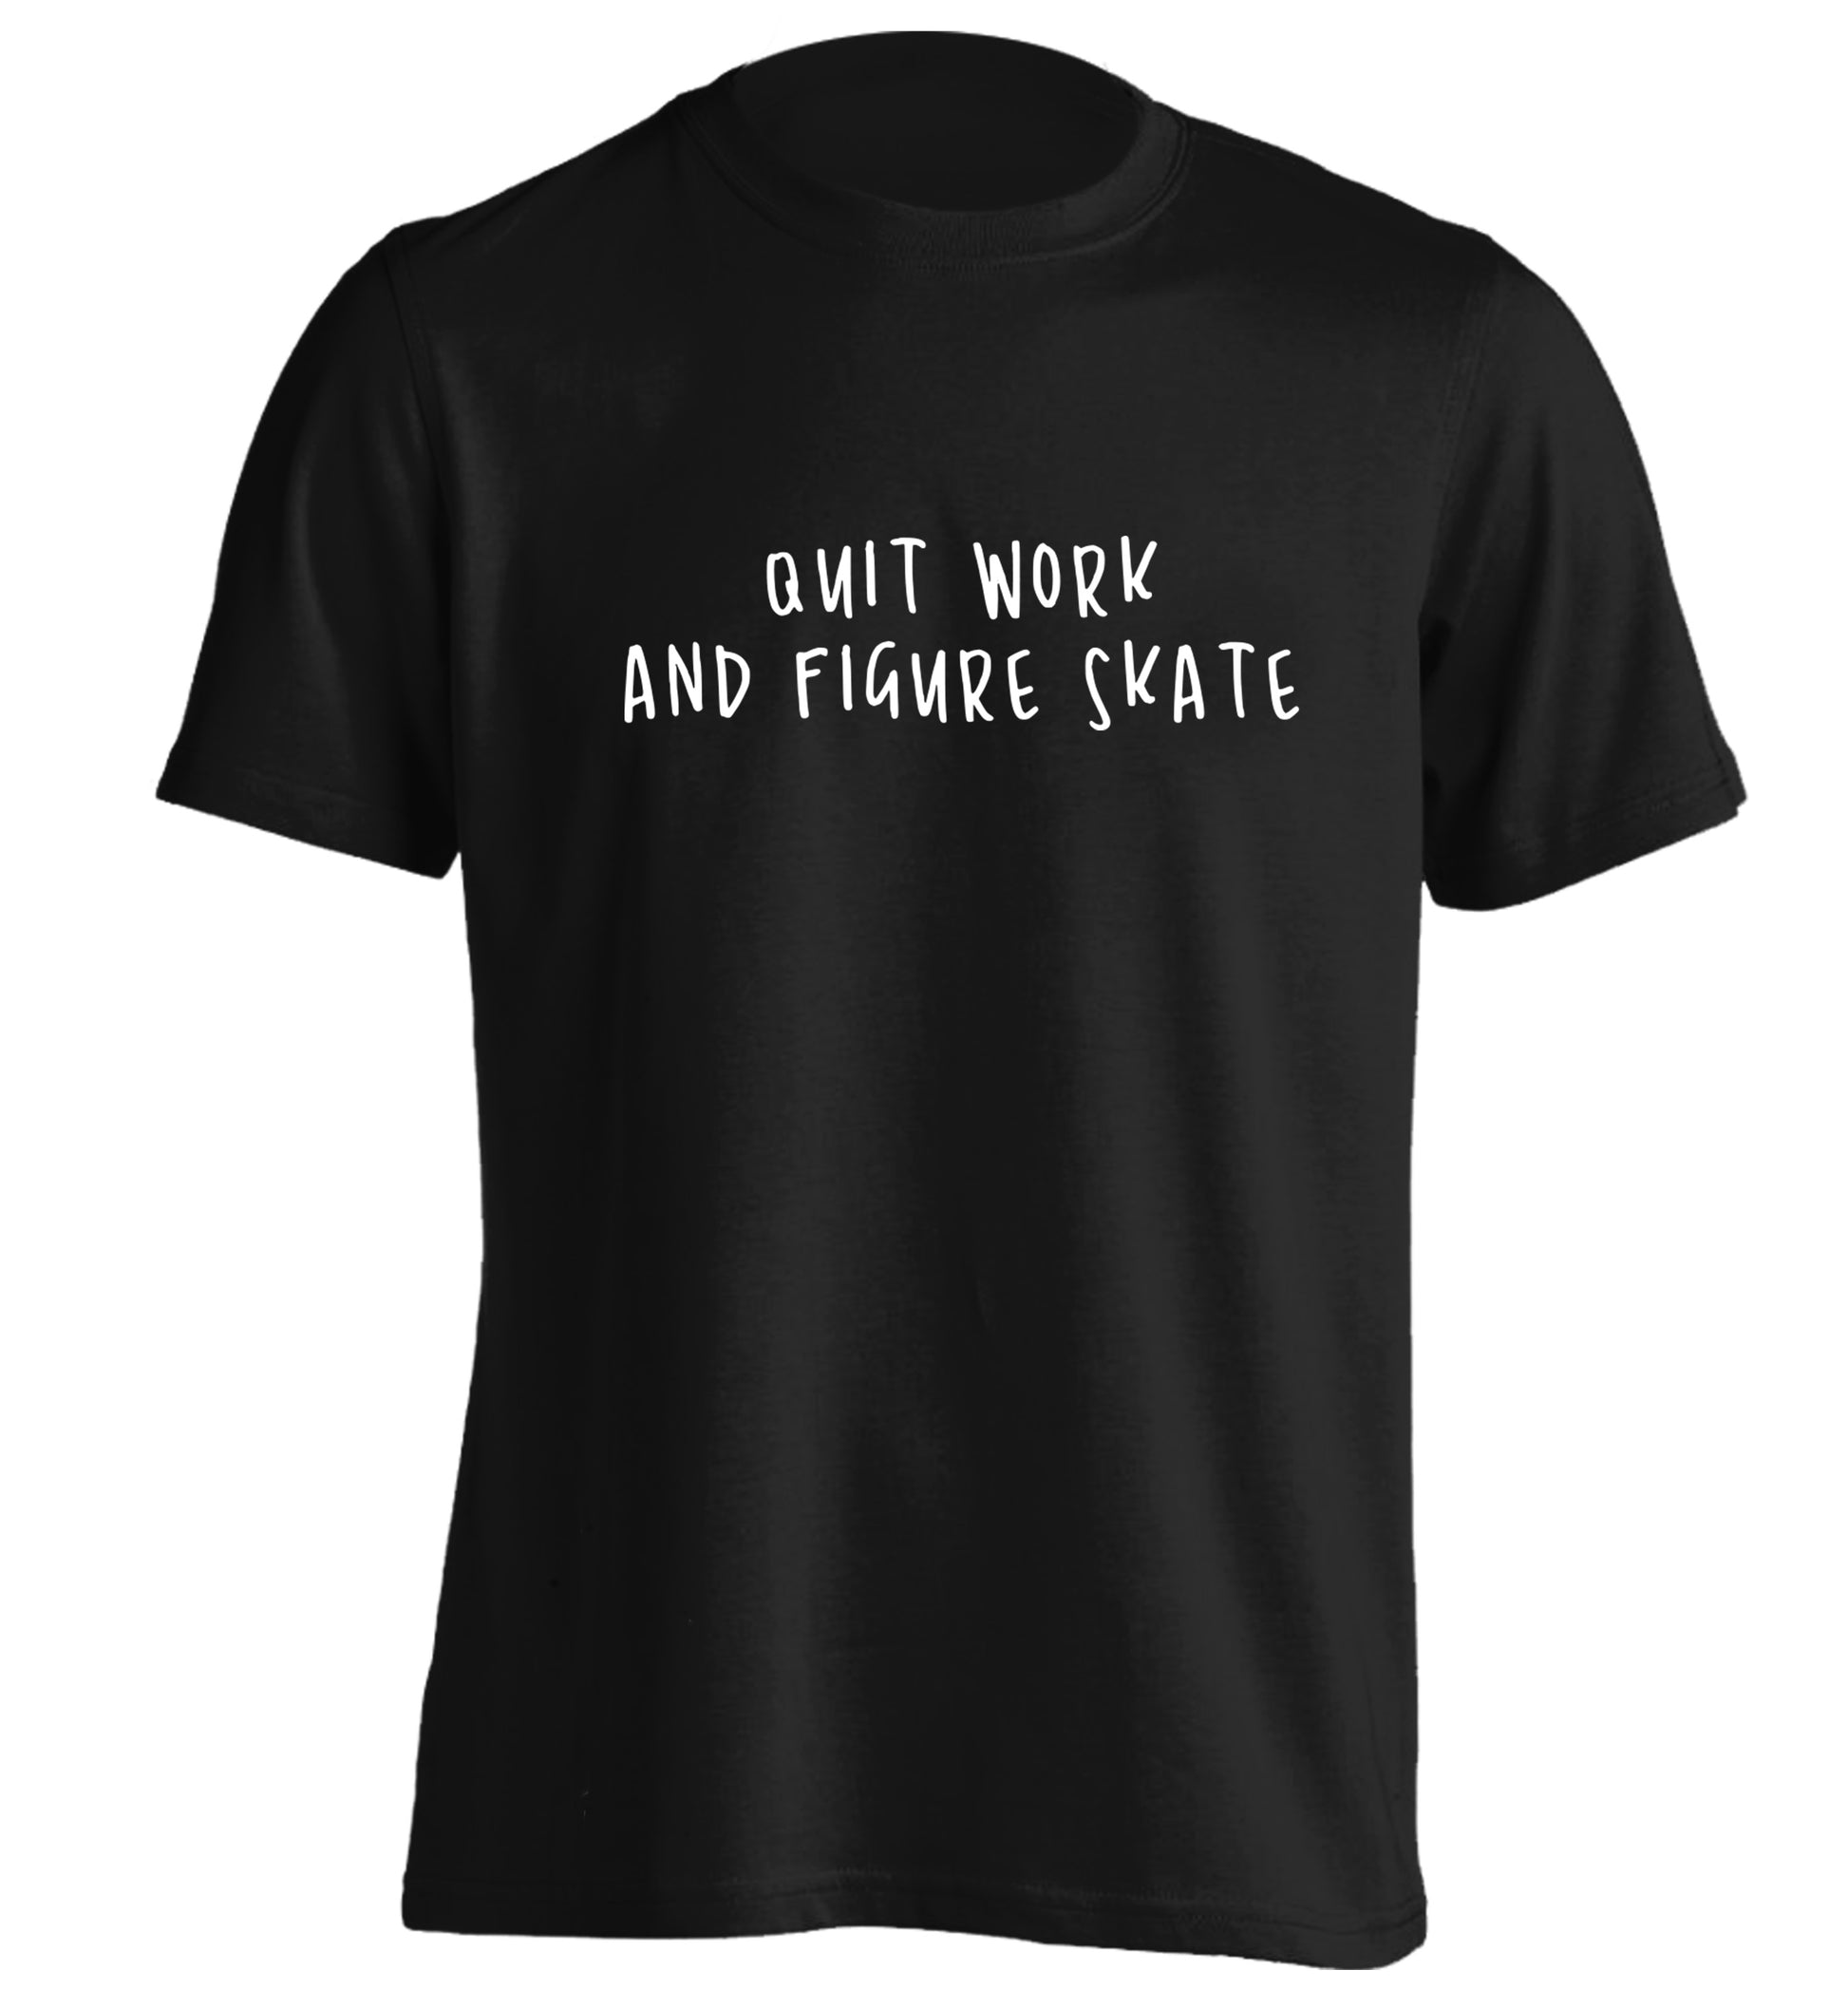 Quit work figure skate adults unisexblack Tshirt 2XL